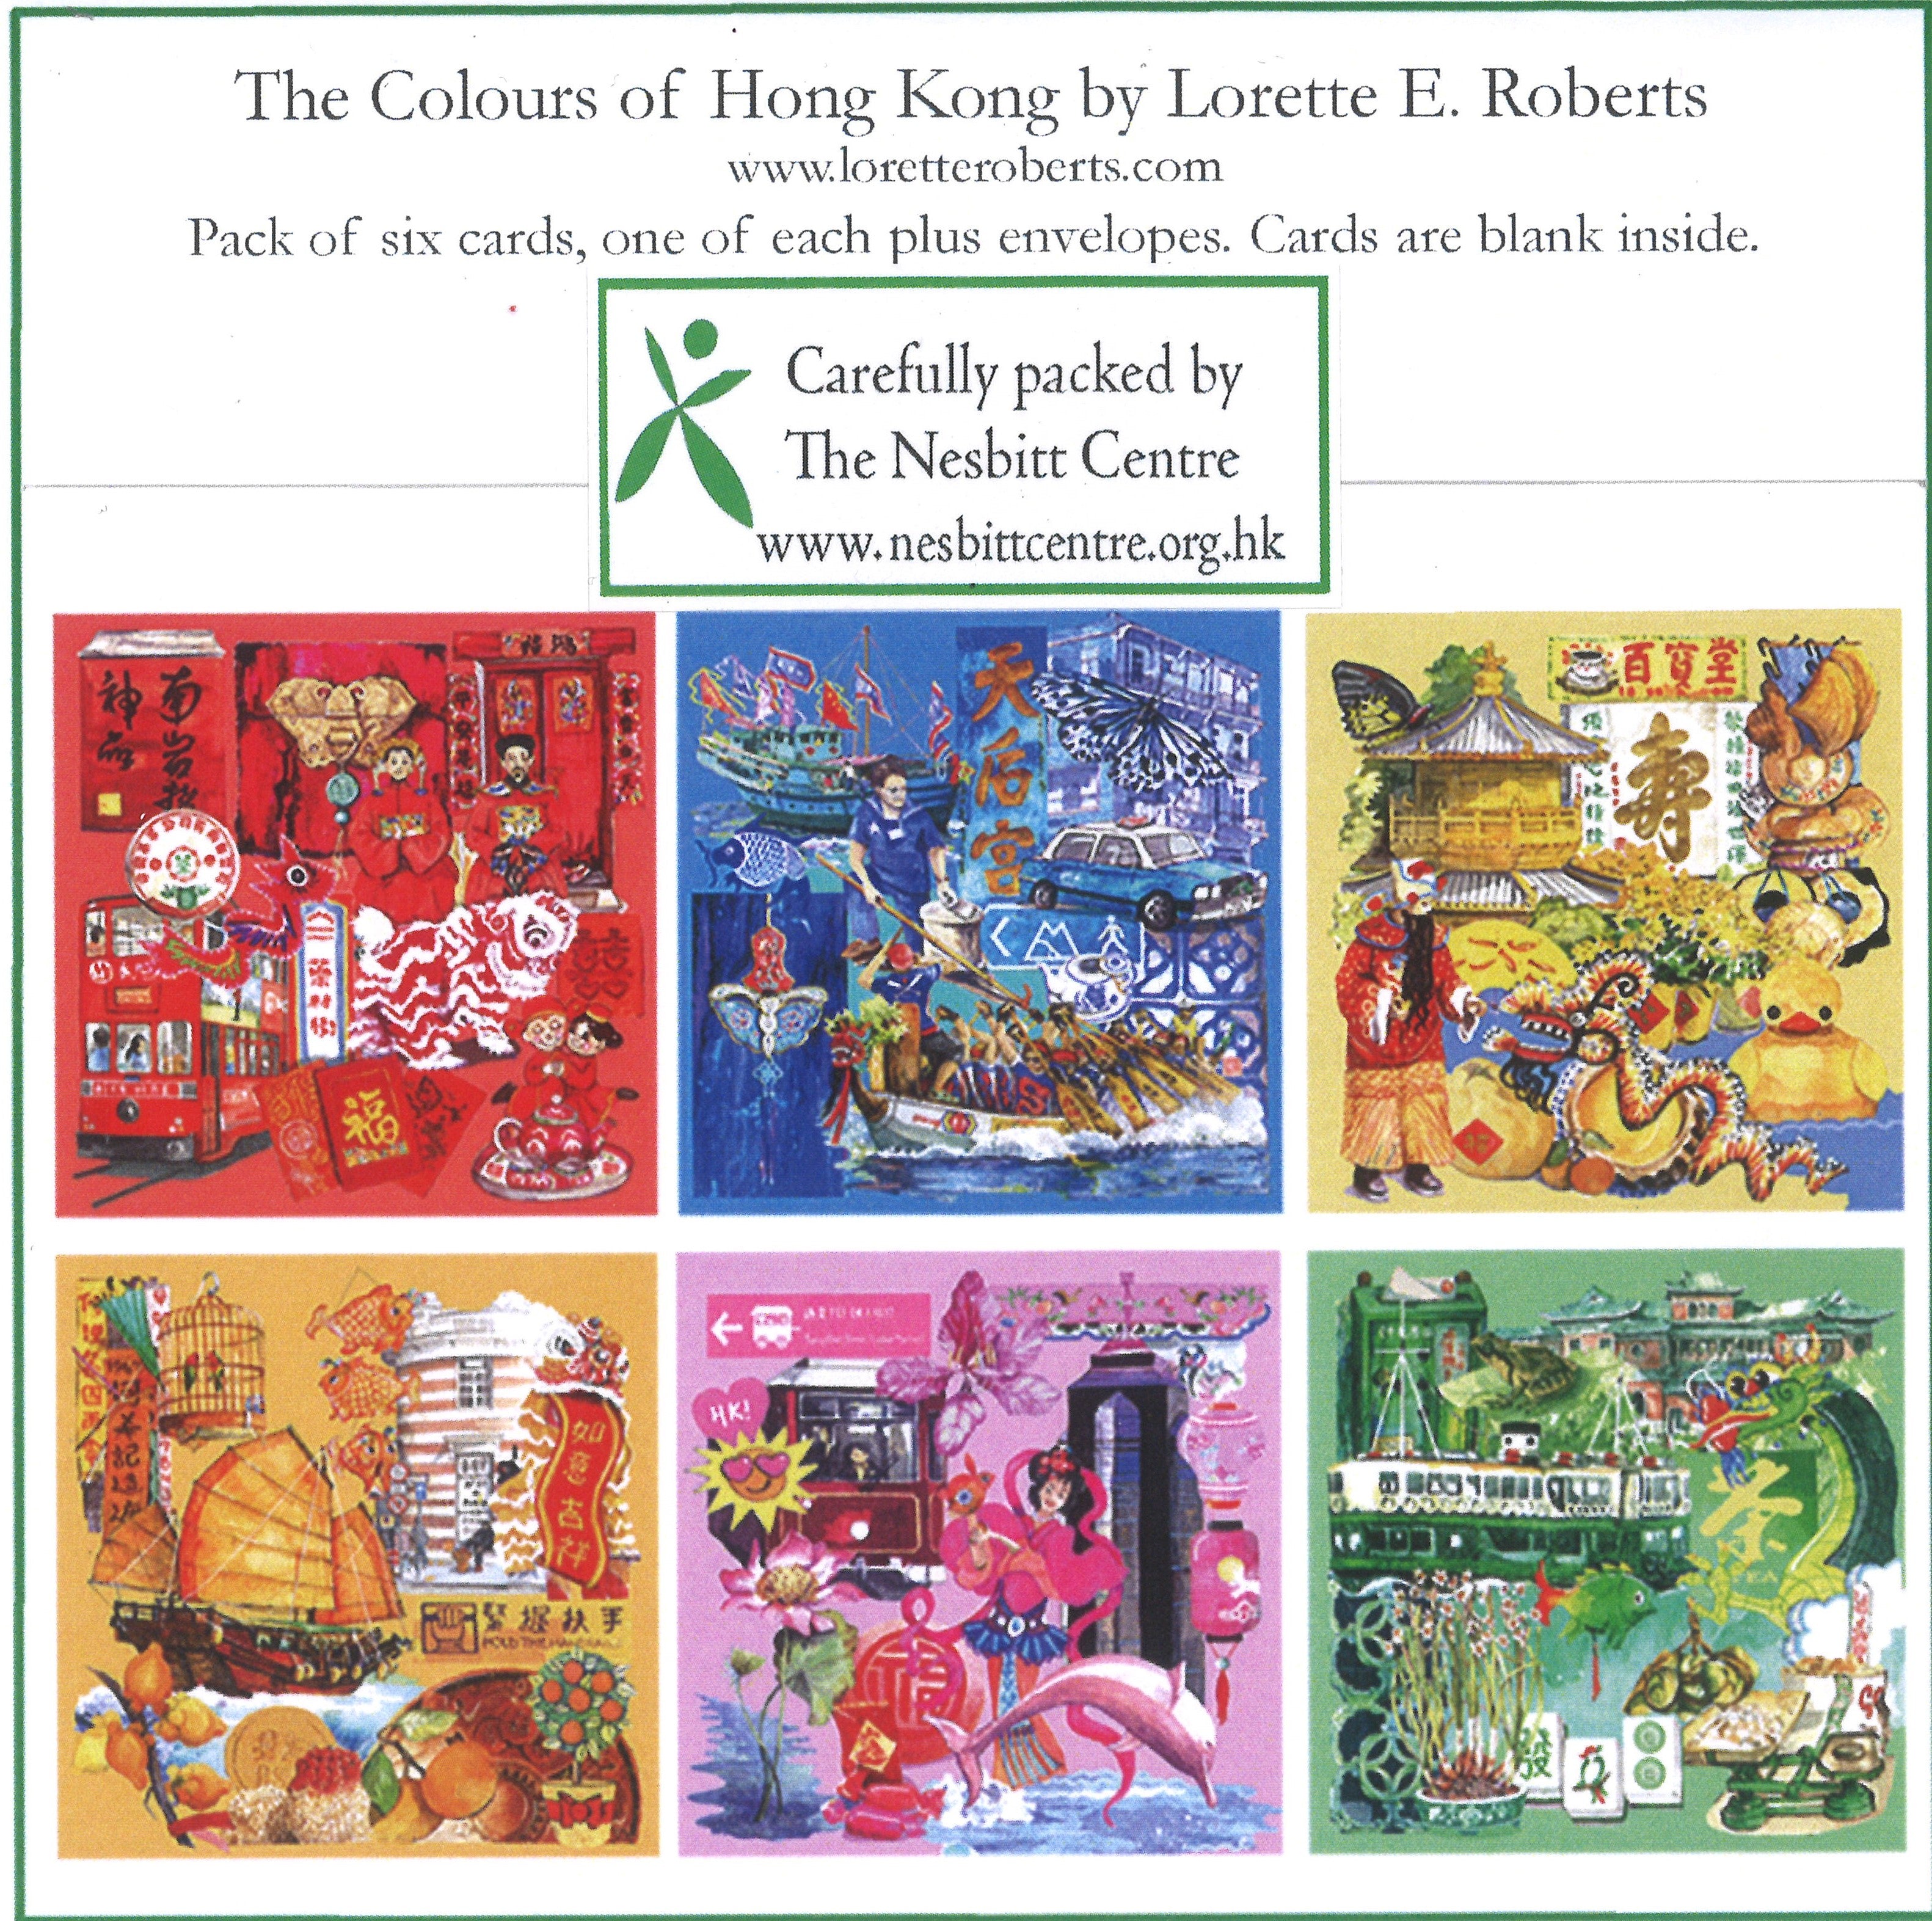 Hong Kong Collage Greeting card (Lorette E. Roberts) - Bookazine HK